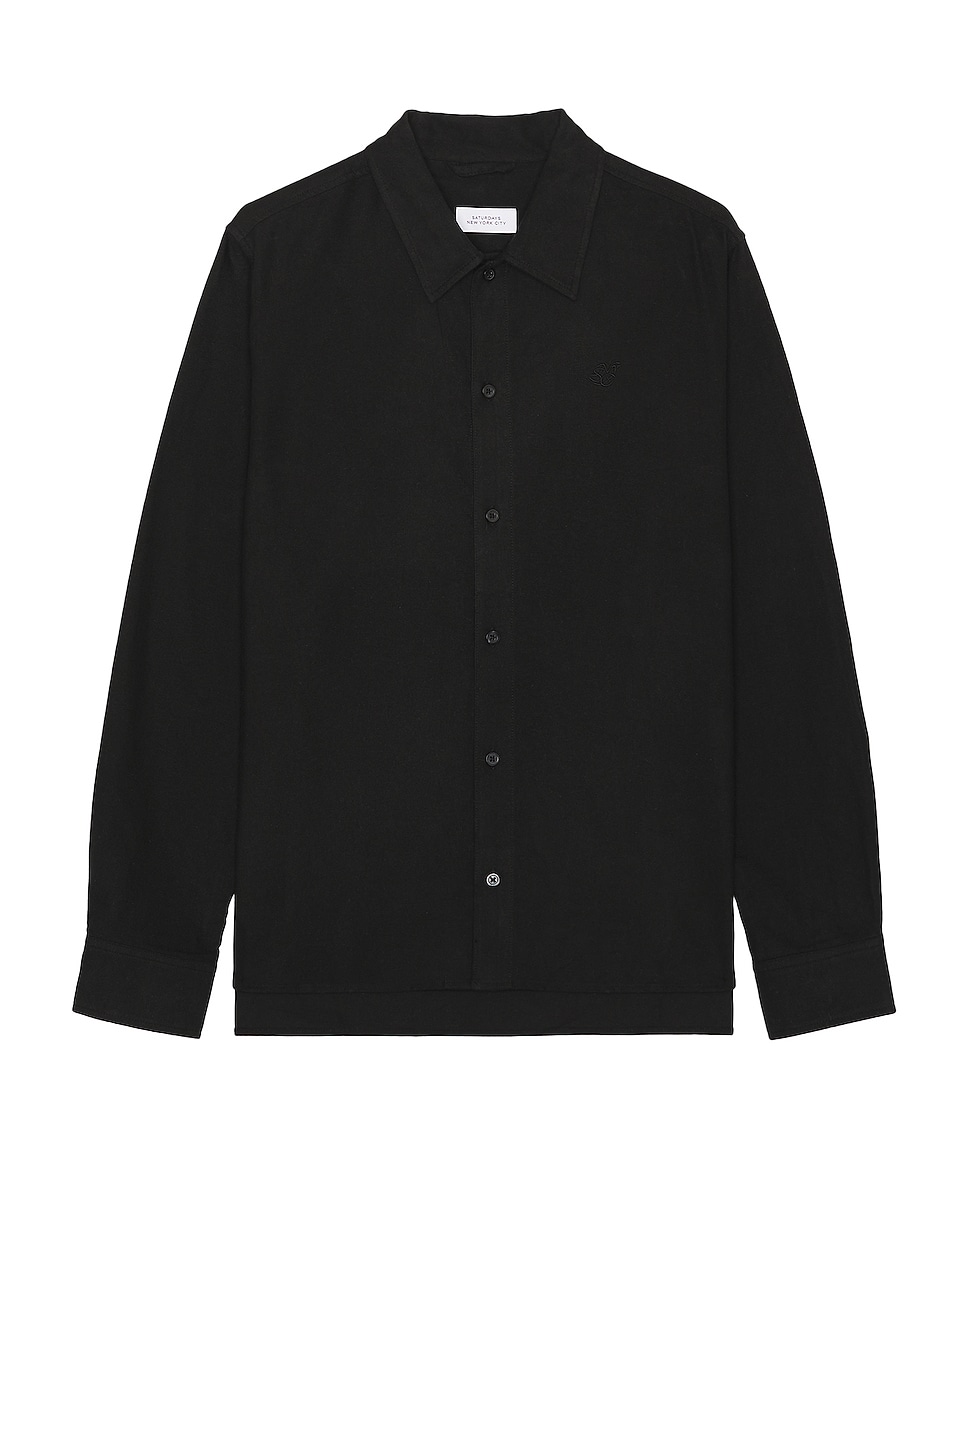 Рубашка Saturdays Nyc Broome Flannel, черный цена и фото